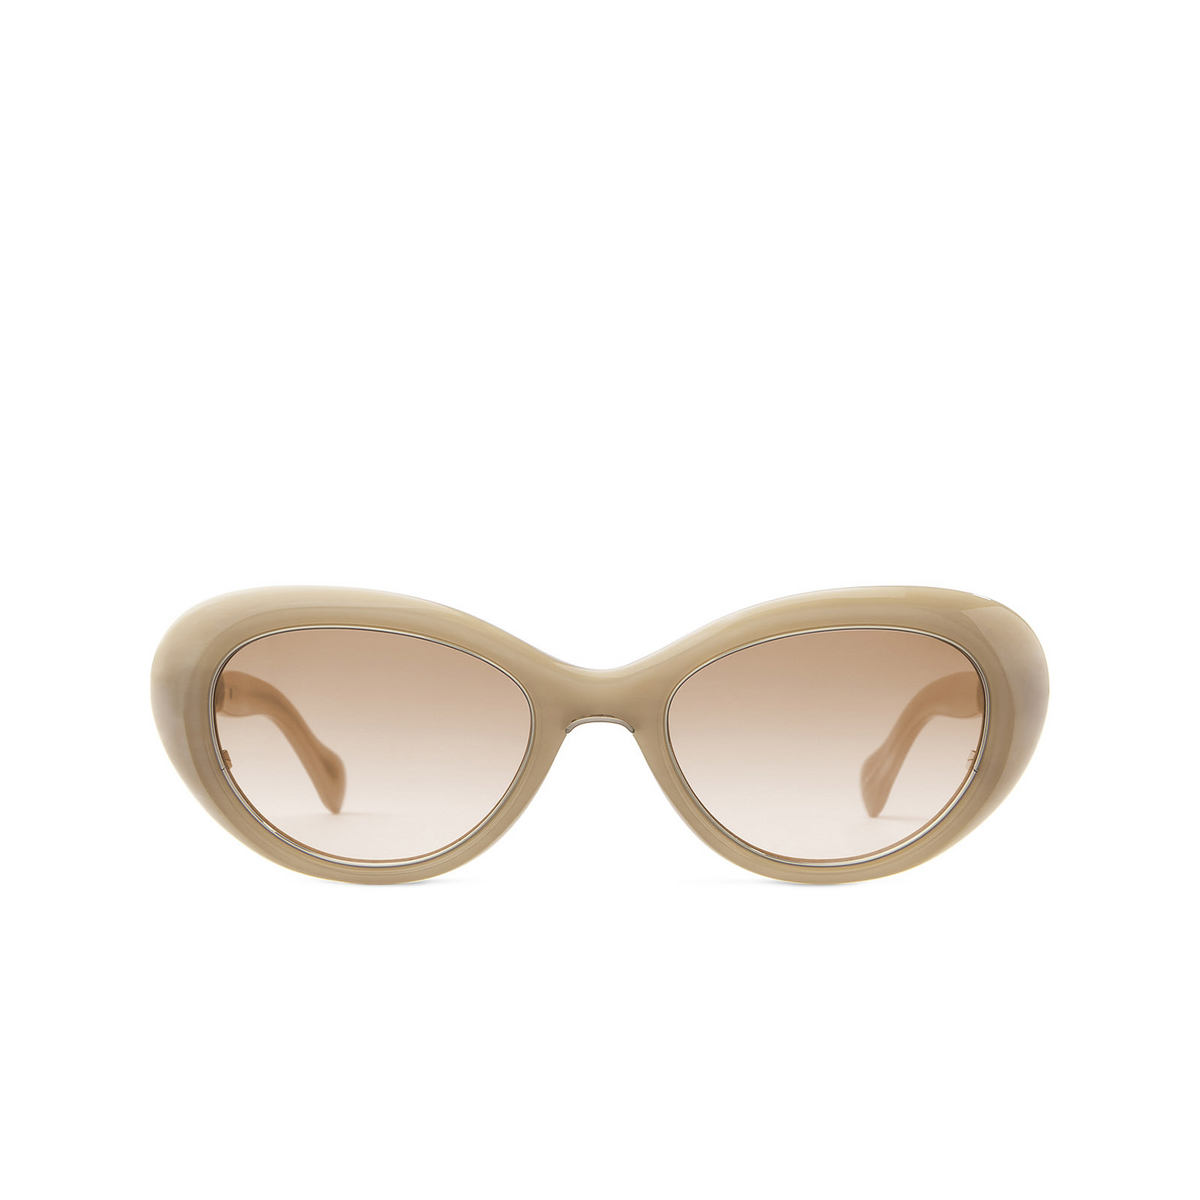 Mr. Leight SELMA S Sunglasses DESA/CING Desert Sand - front view